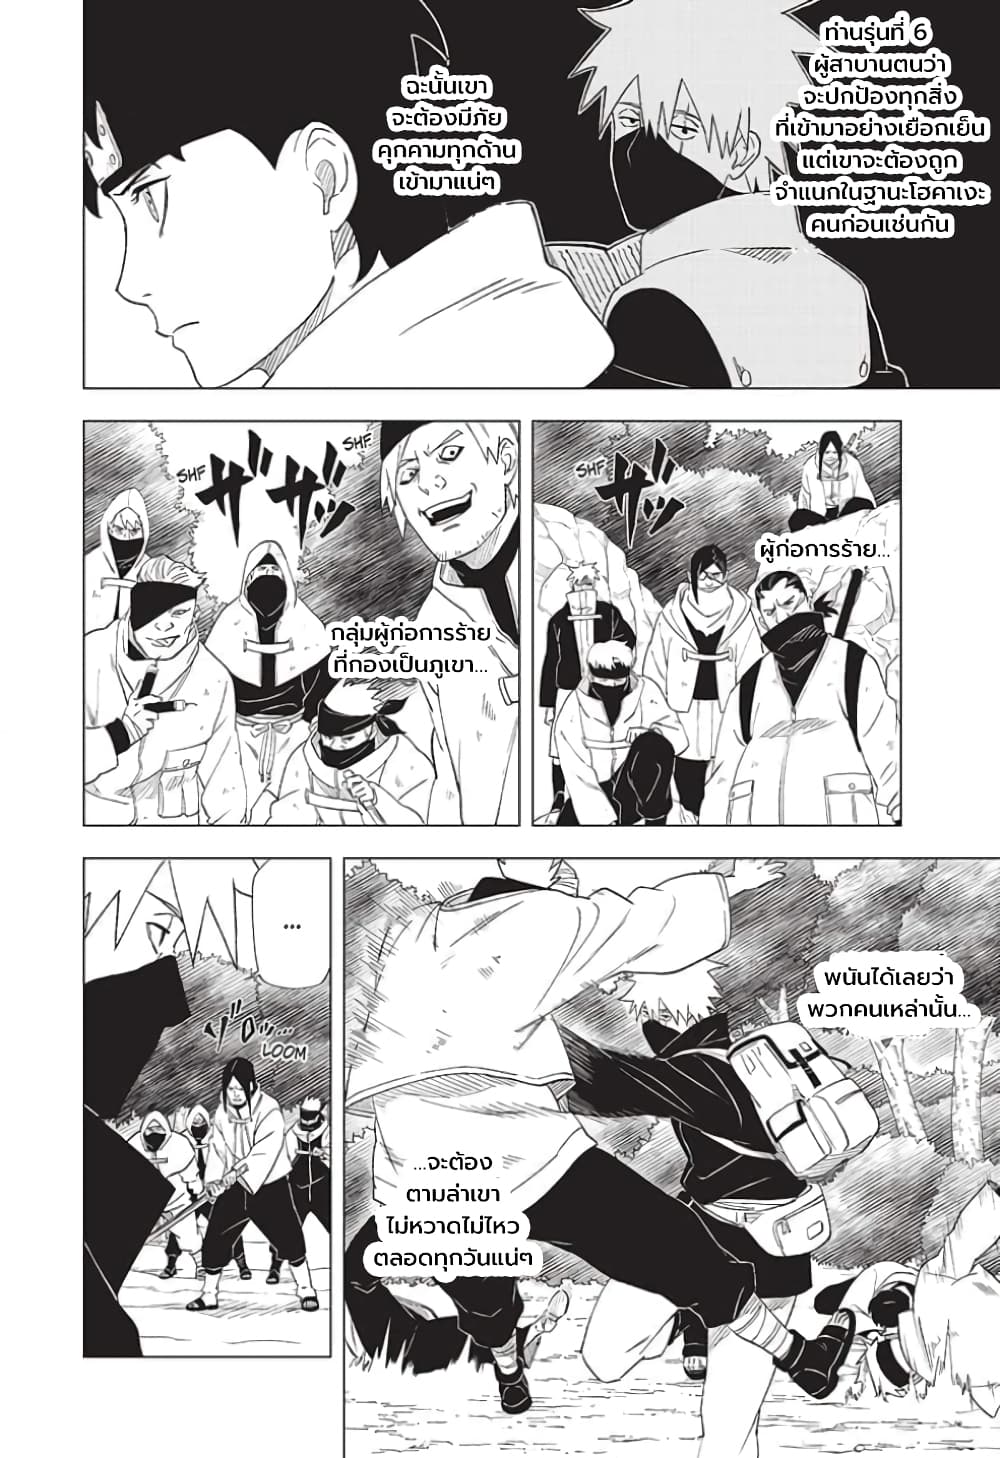 Naruto Konoha’s Story – The Steam Ninja Scrolls The Manga 2 26